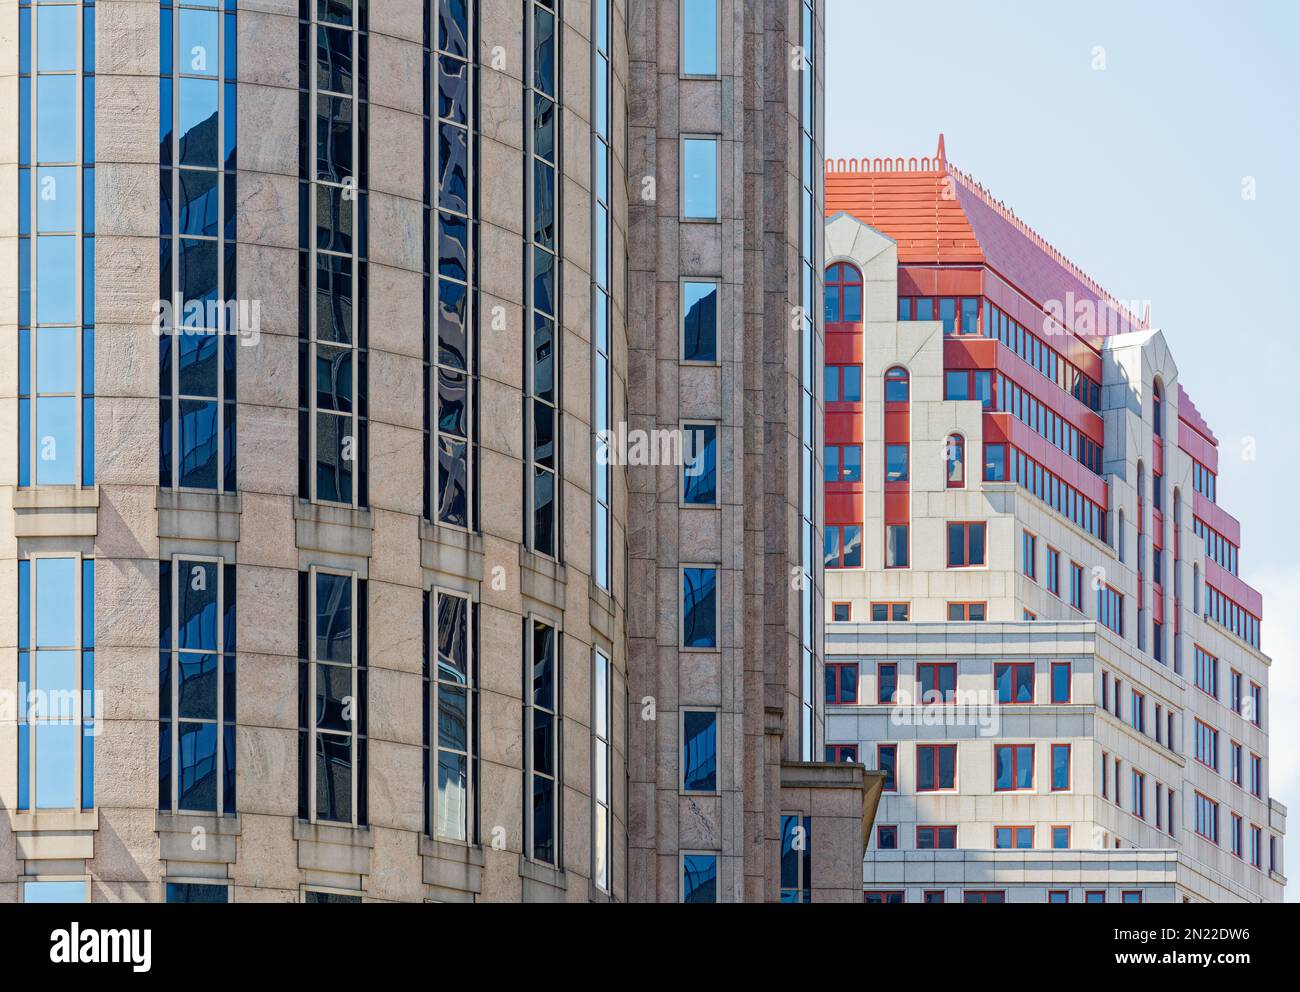 Boston Financial District: 99 Summer Street’s distinctive red crown makes it a downtown landmark. Stock Photo